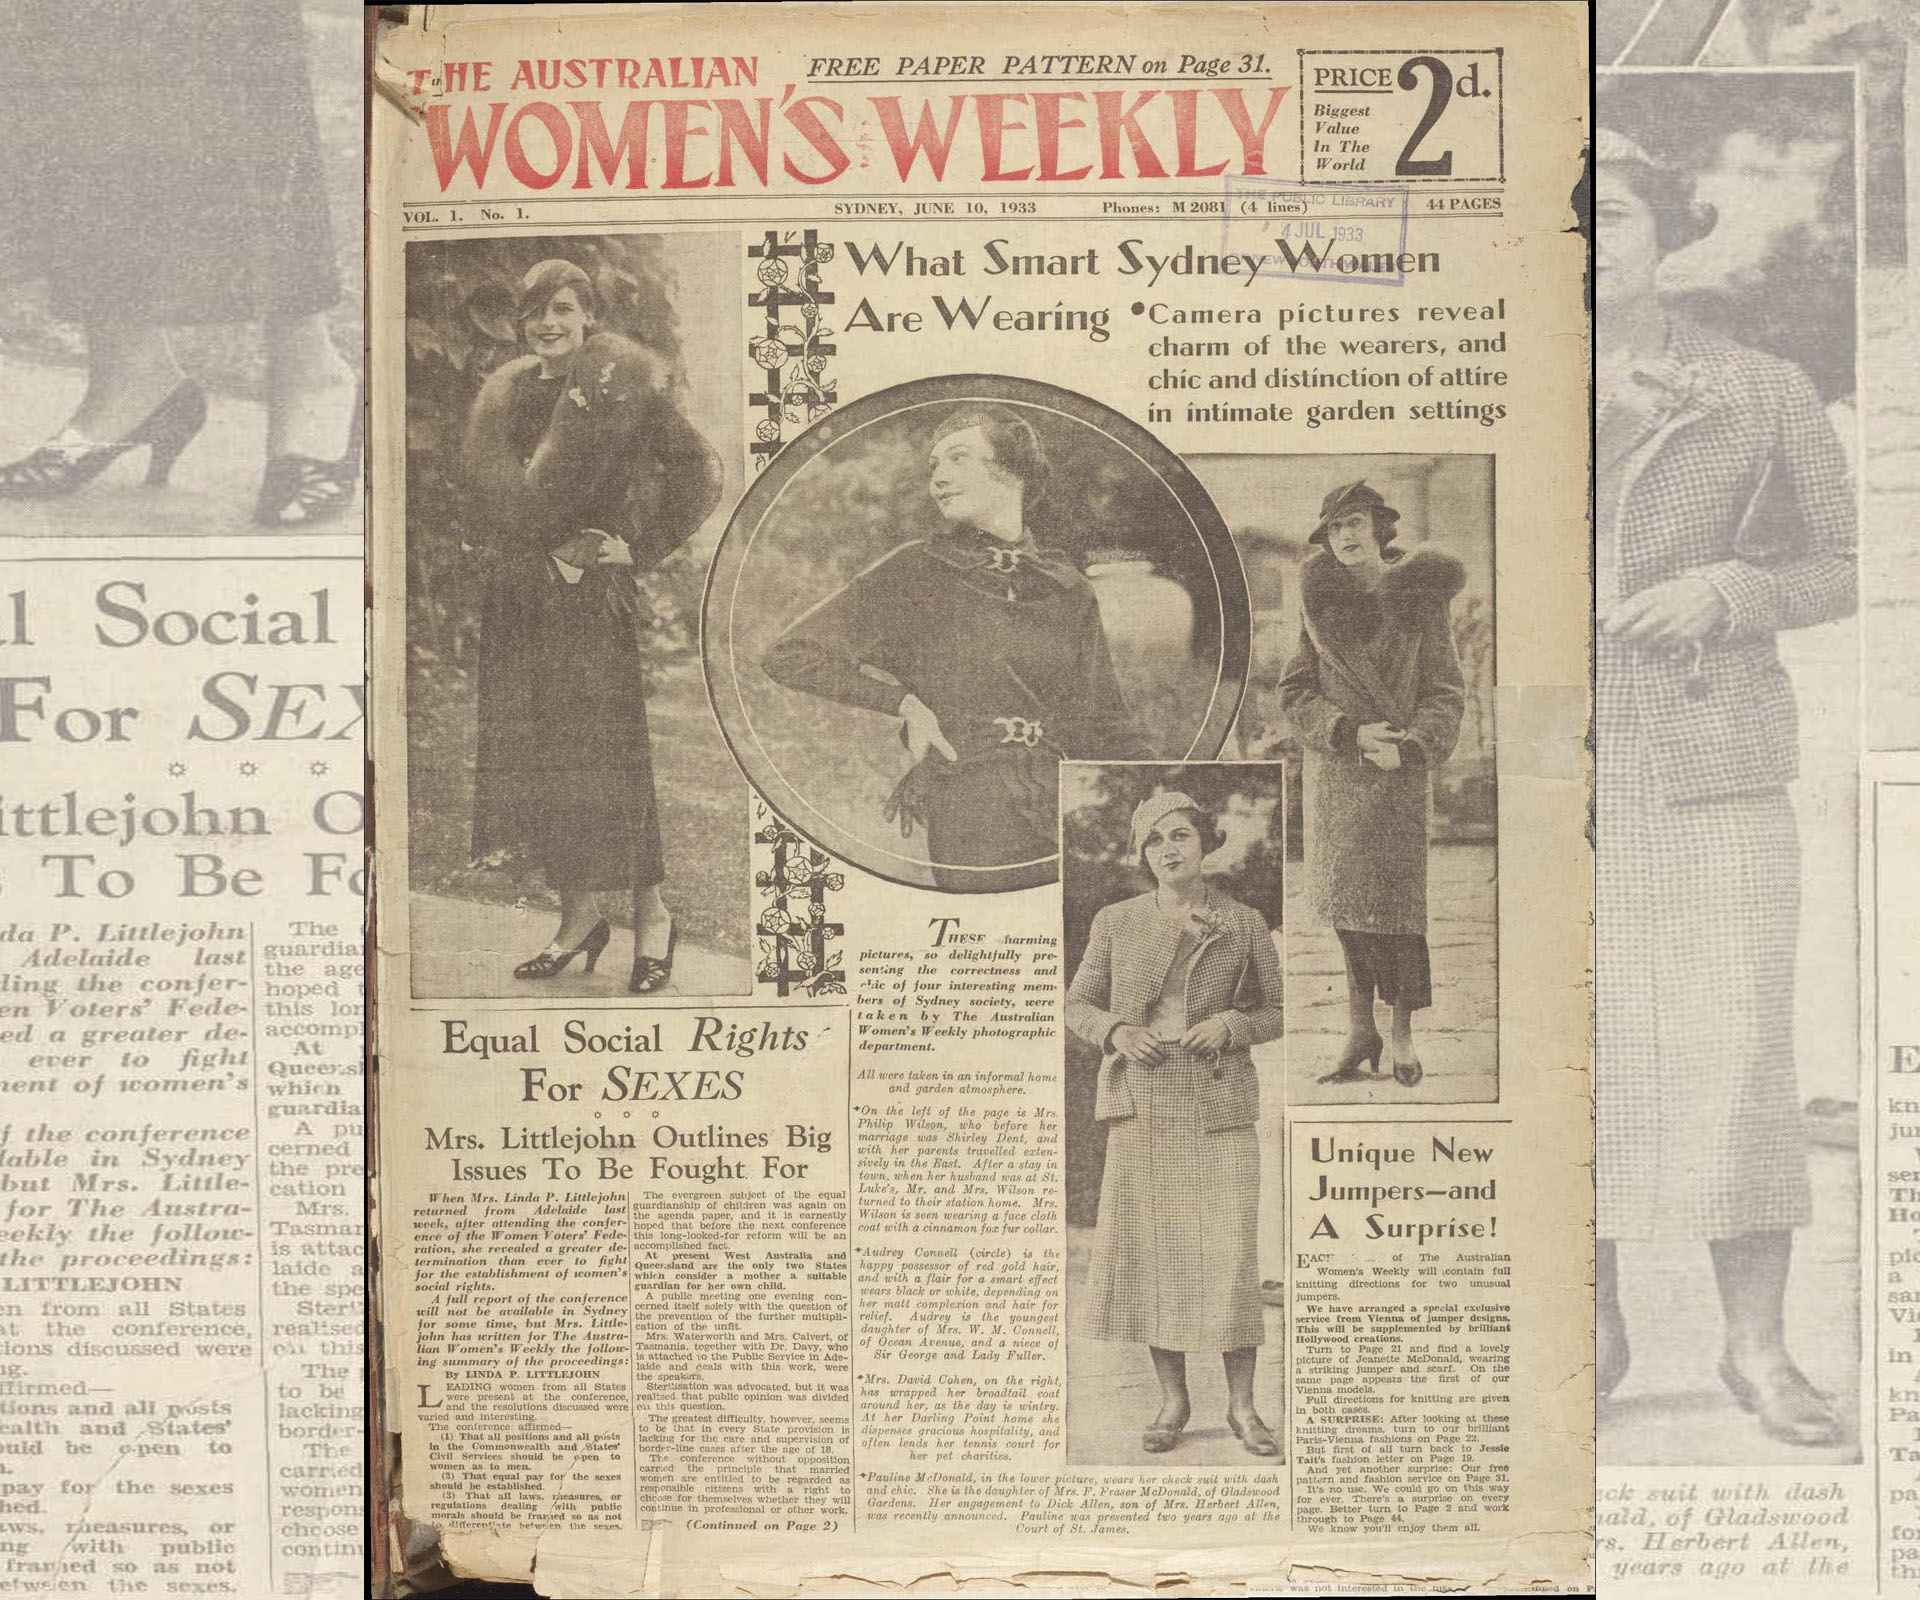 The Australian Women’s Weekly turns 82!